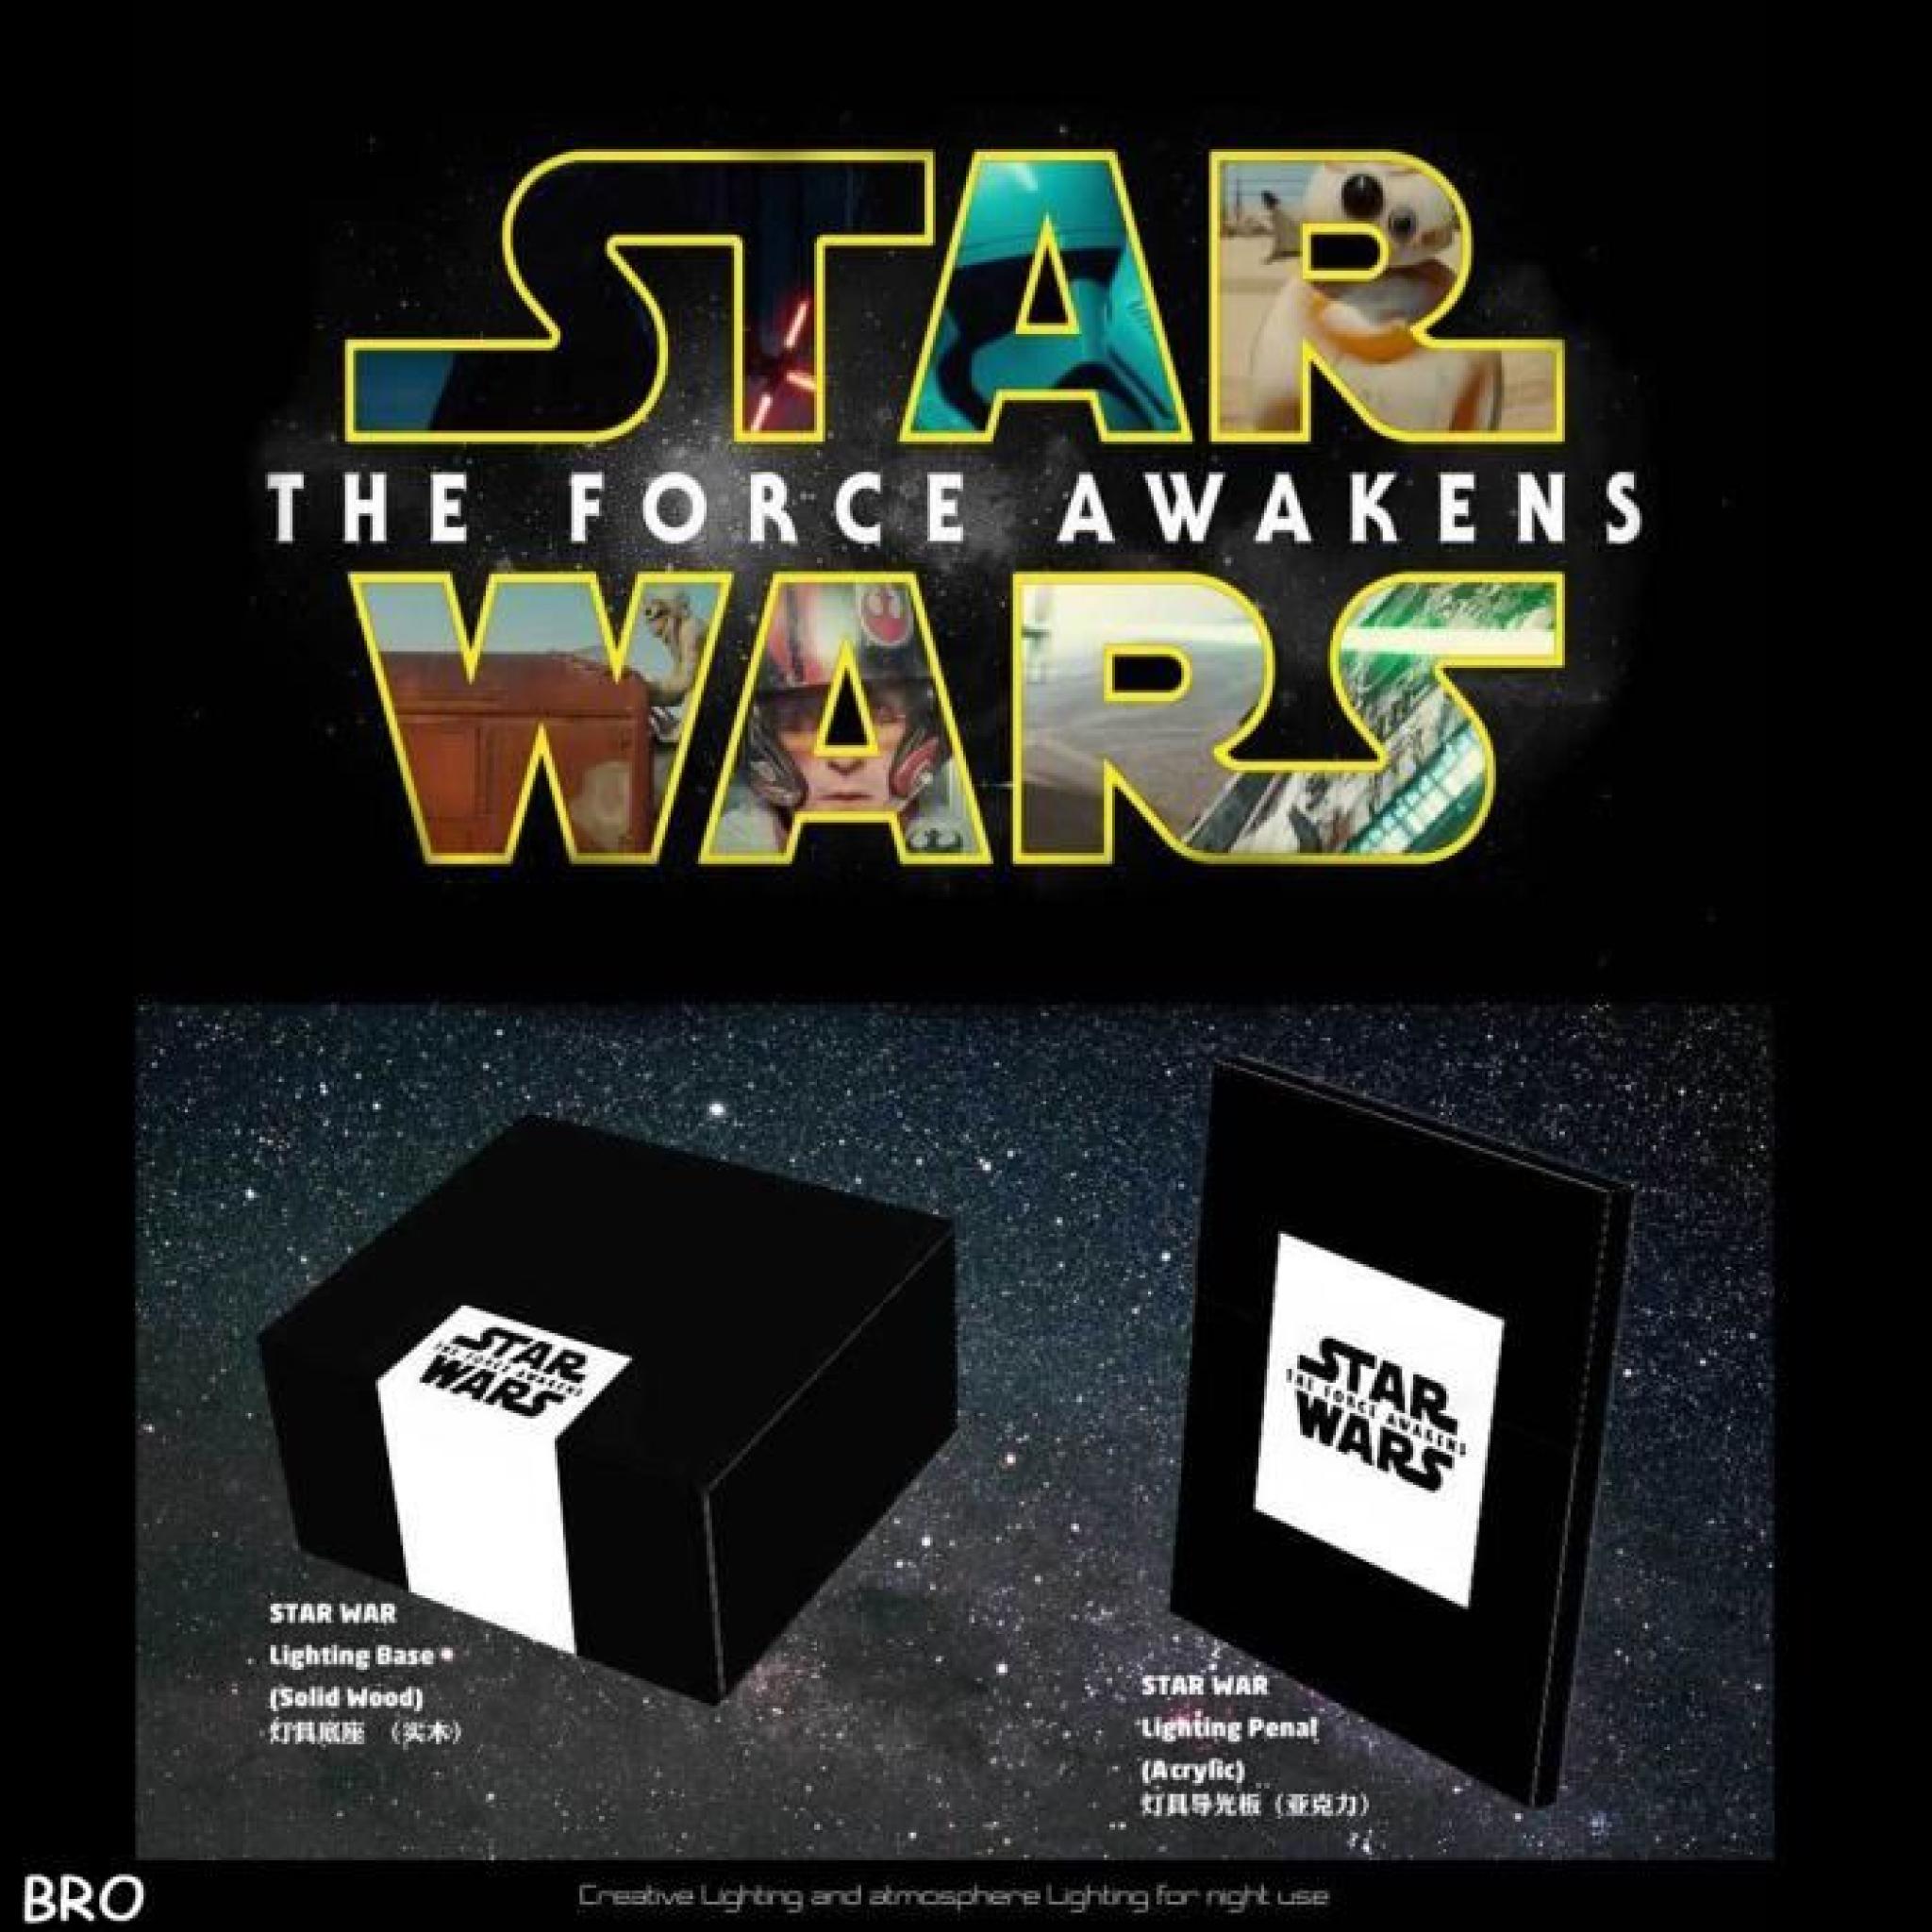 BRO Star Wars USB Lampe Décorative 3D Dark Vador pas cher